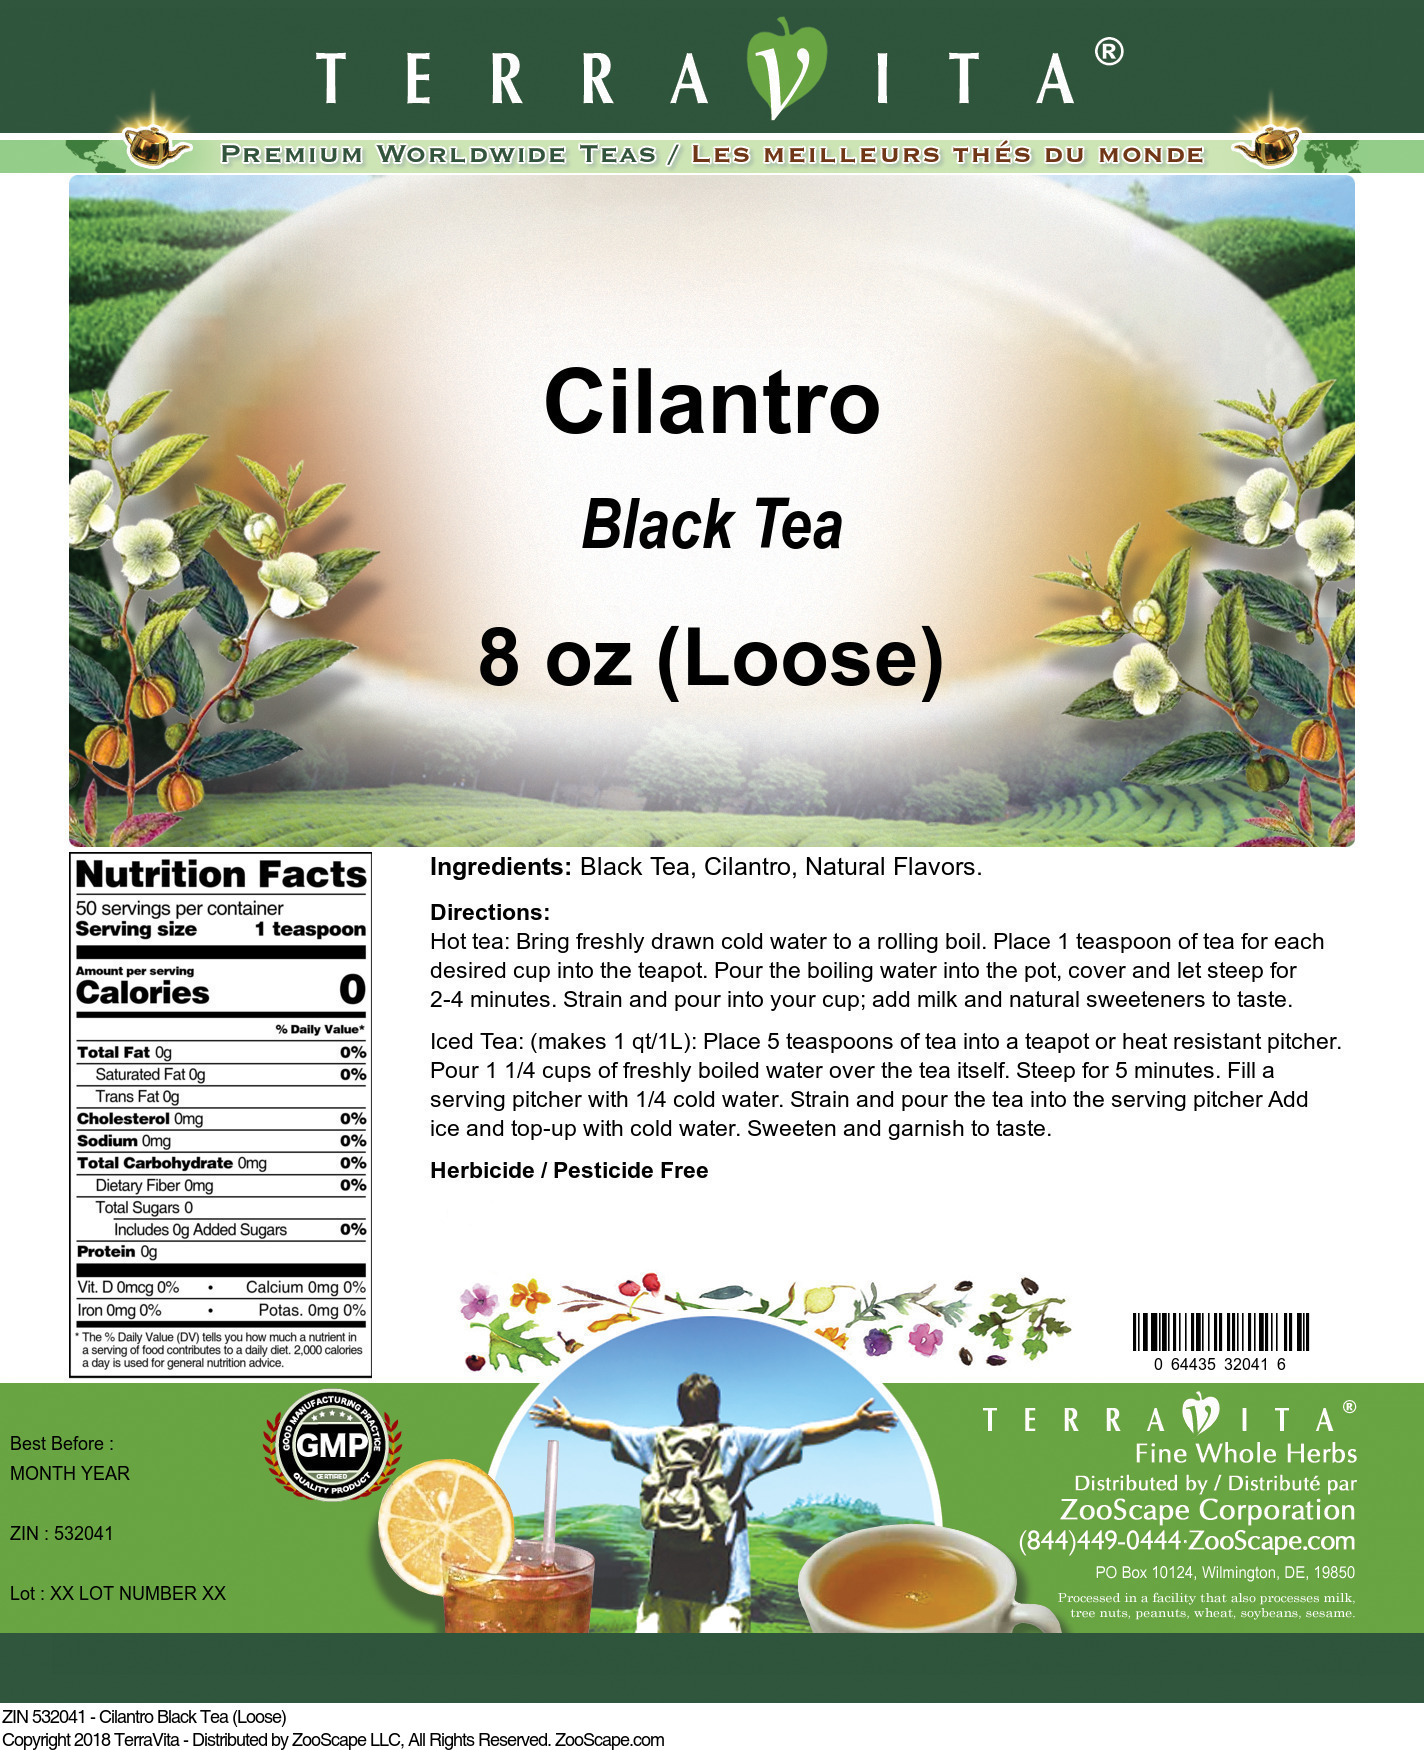 Cilantro Black Tea (Loose) - Label